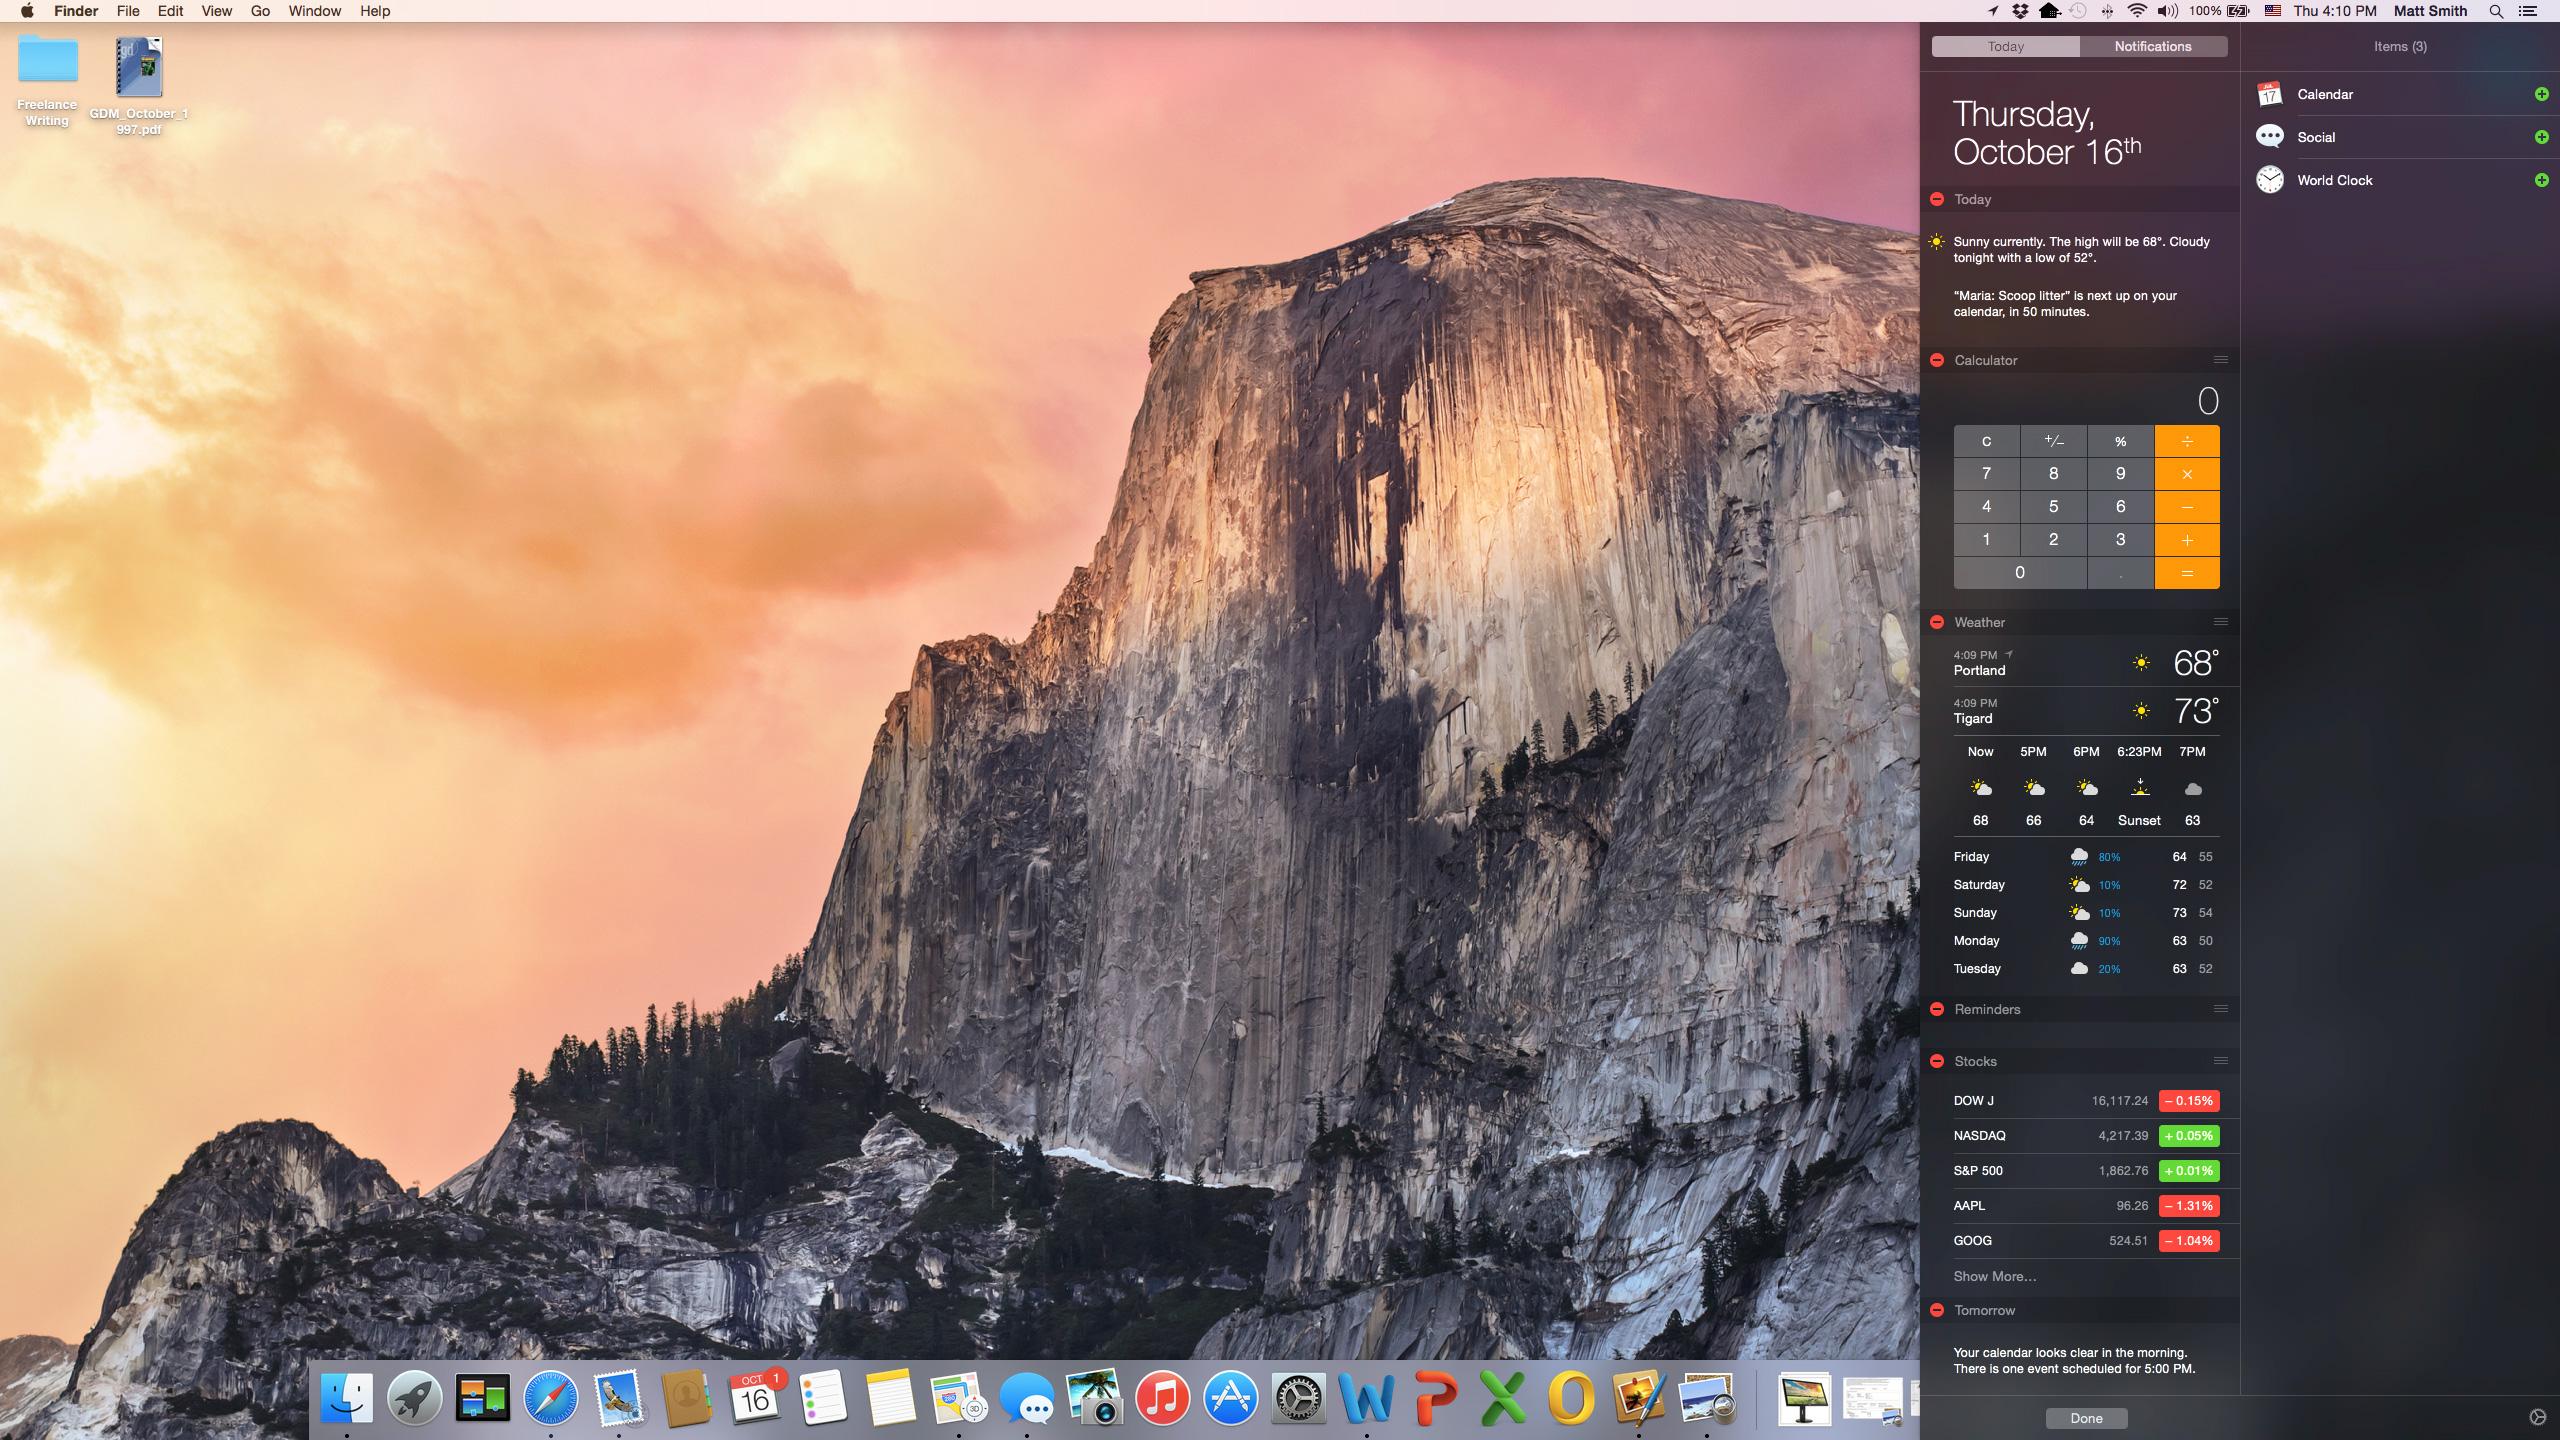 OS X Yosemite notification center